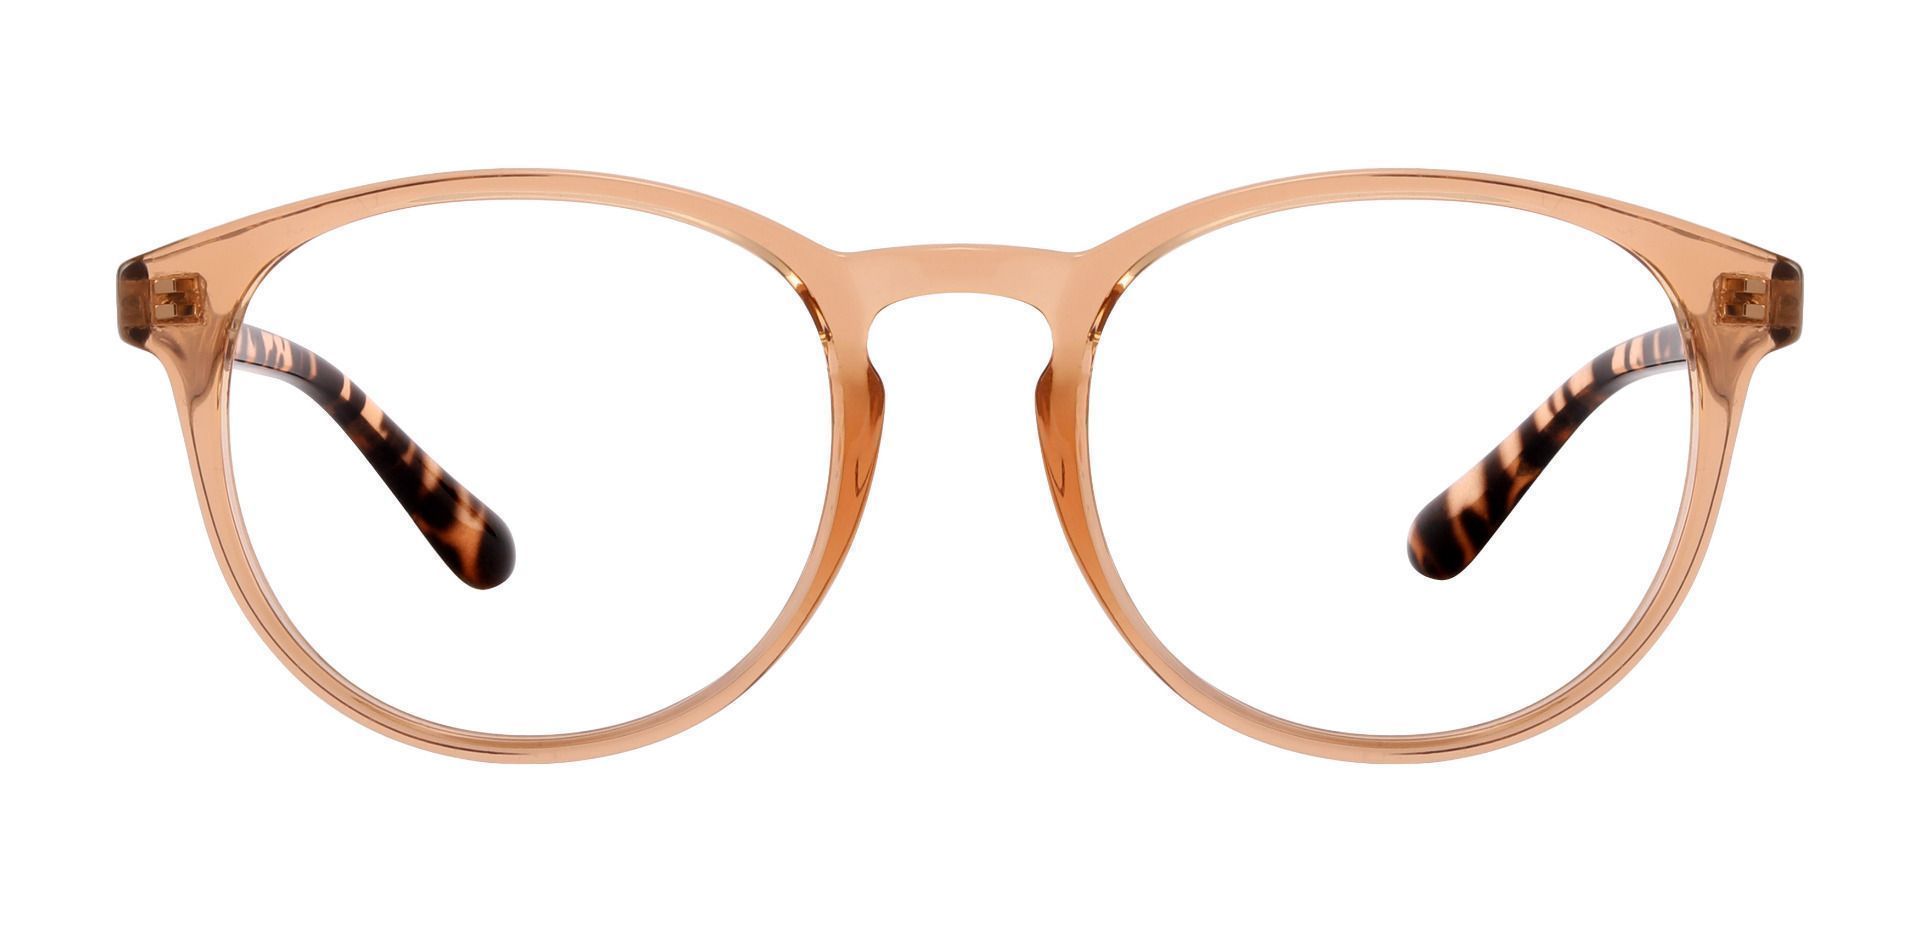 Clarita Oval Reading Glasses - Brown